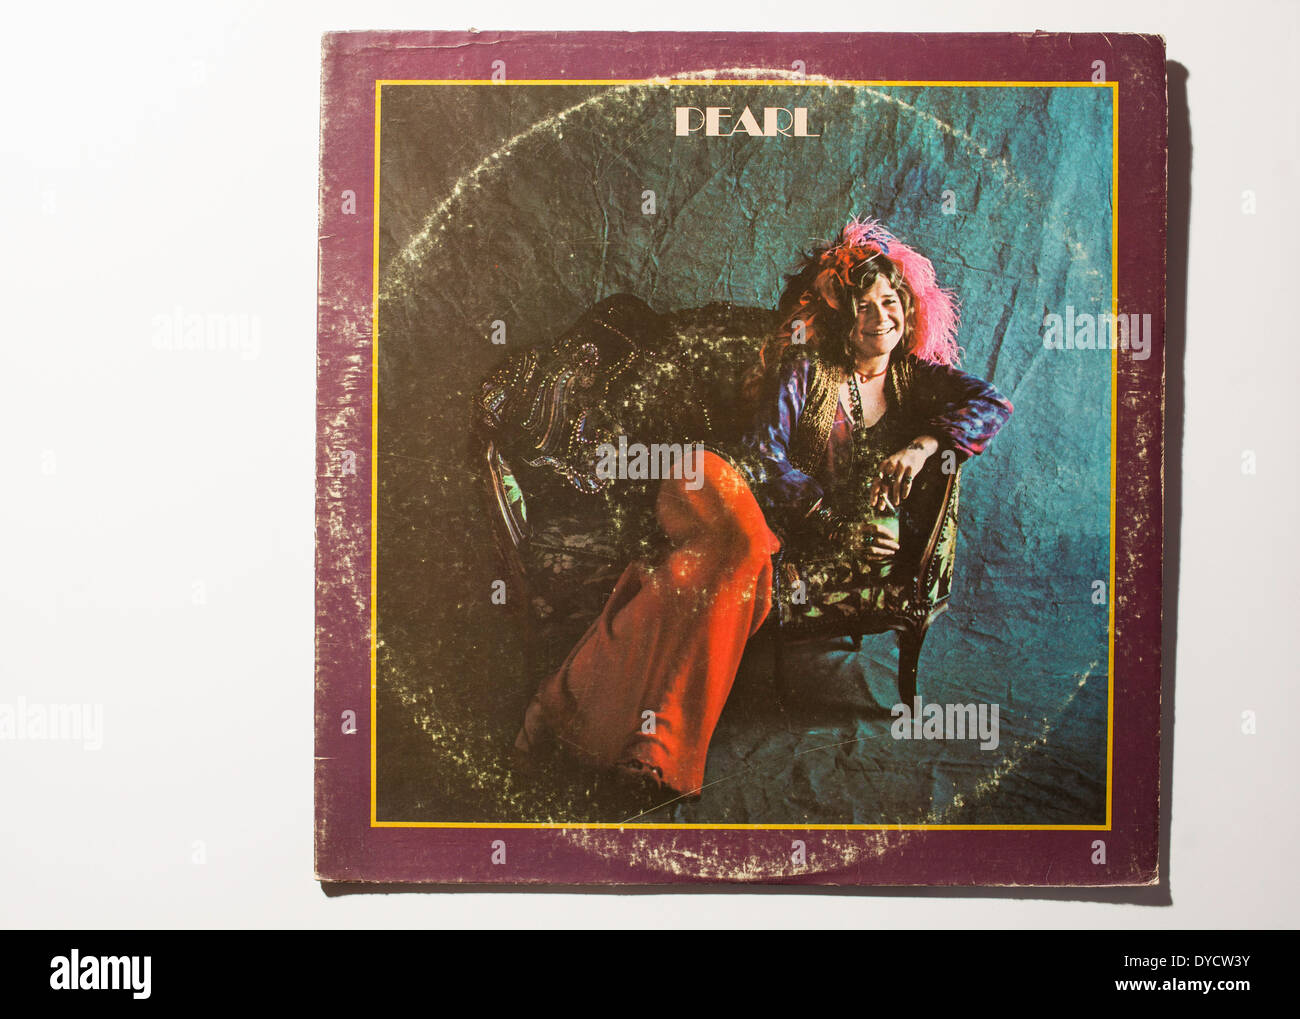 Vinyl record jacket cover art of Janis Joplin's Pearl album from 1971. Stock Photo